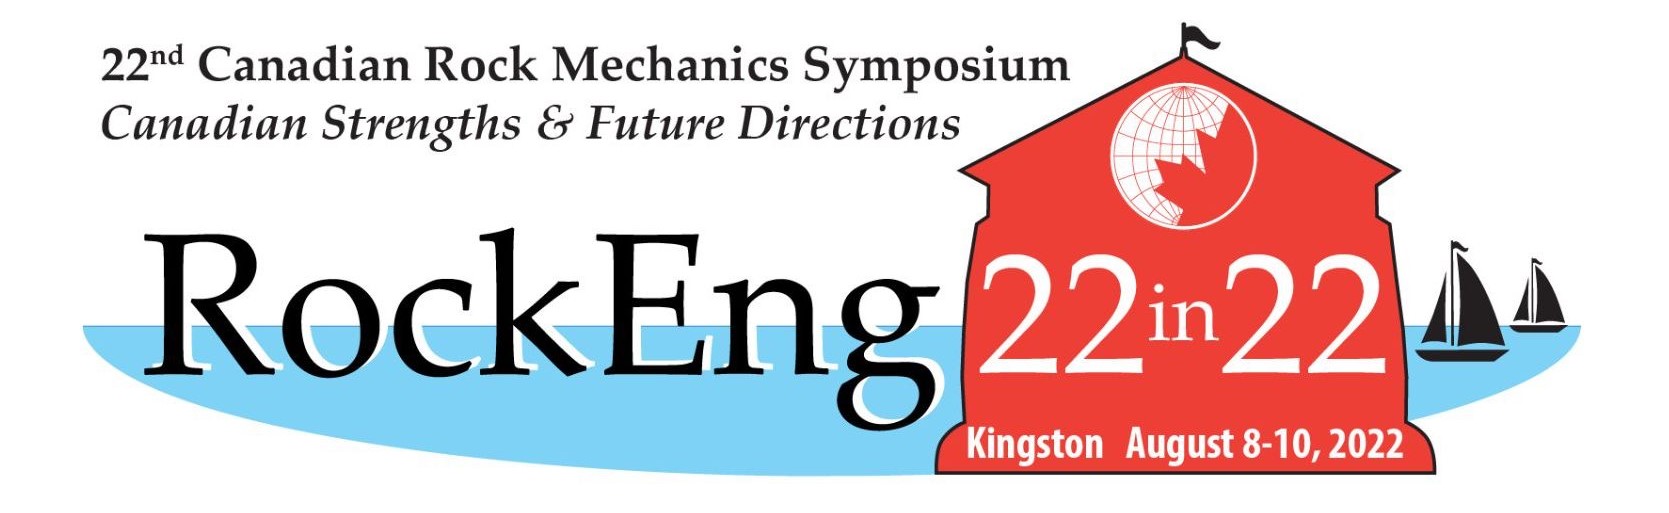 2022-08-04-RockEng-conference-logo-for-web.jpg